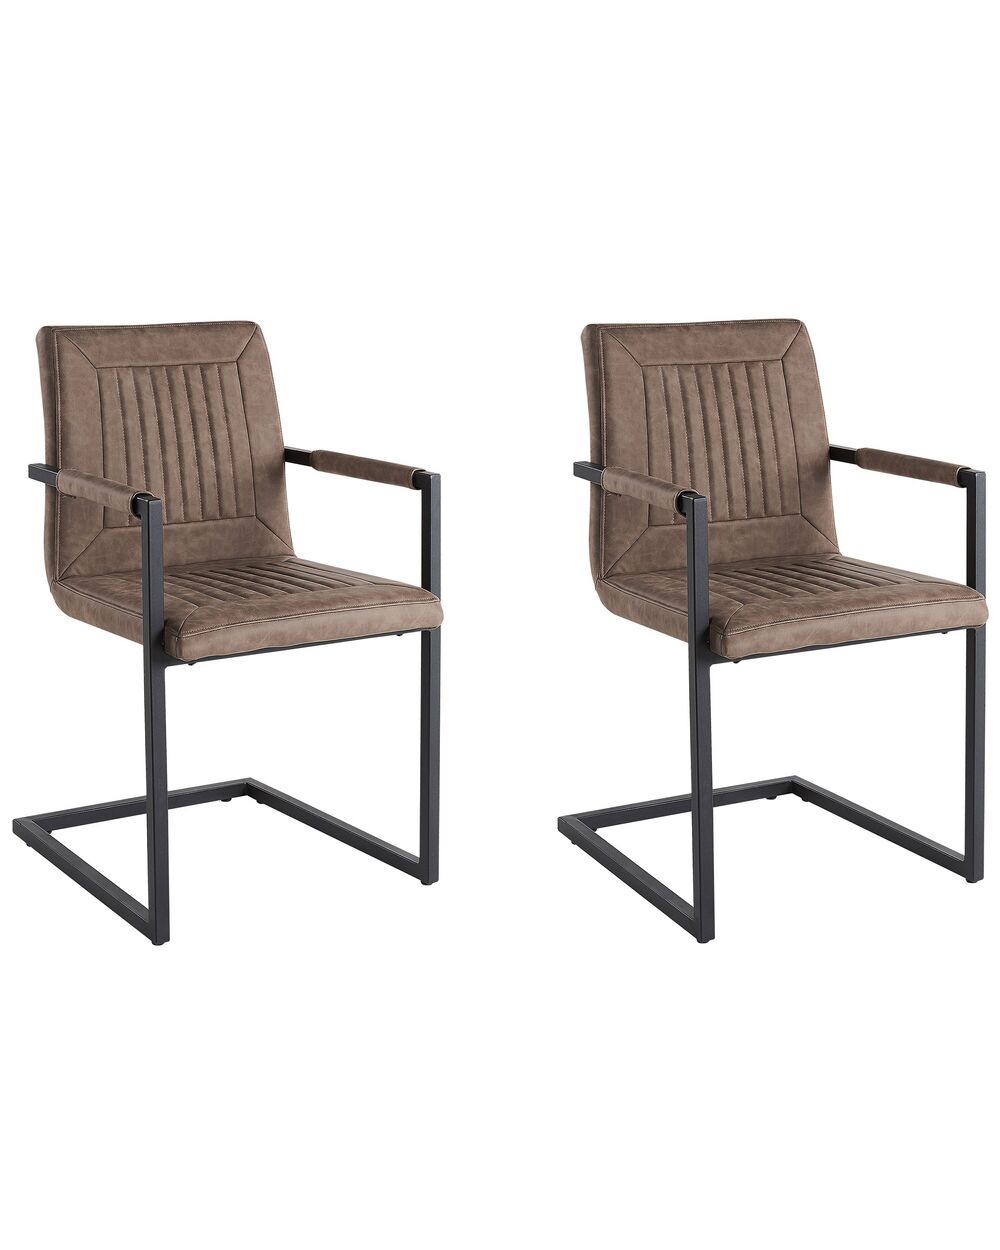 Set of 2 Chairs, Brown, BRANDOL CH